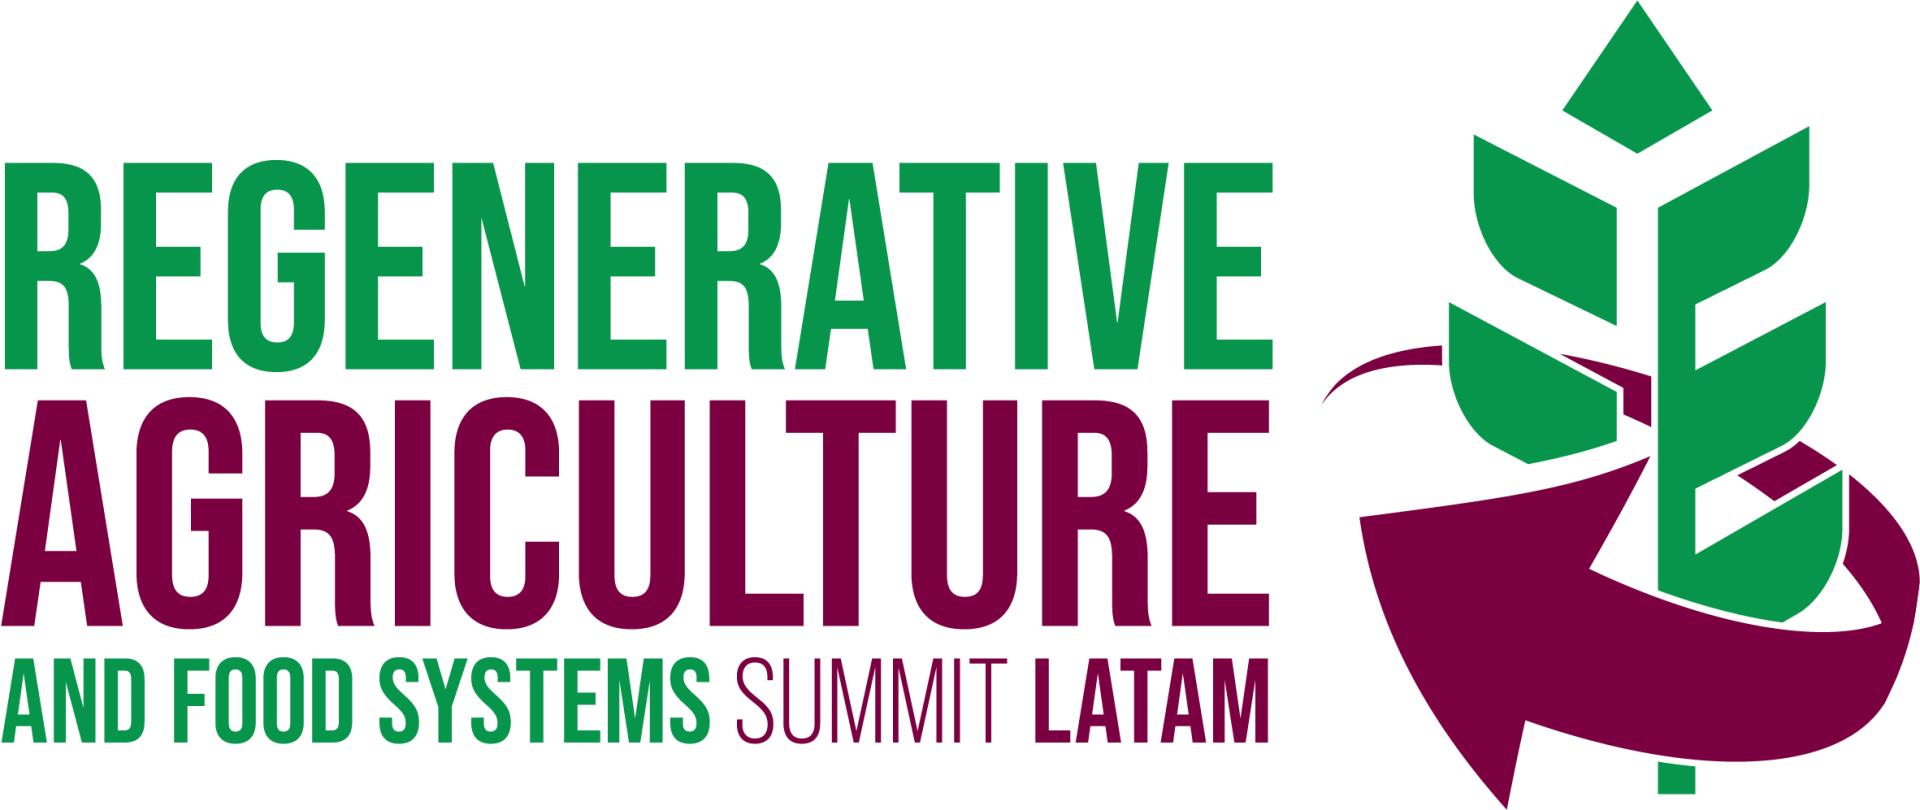 Regenerative Agriculture & Food Systems Summit LATAM